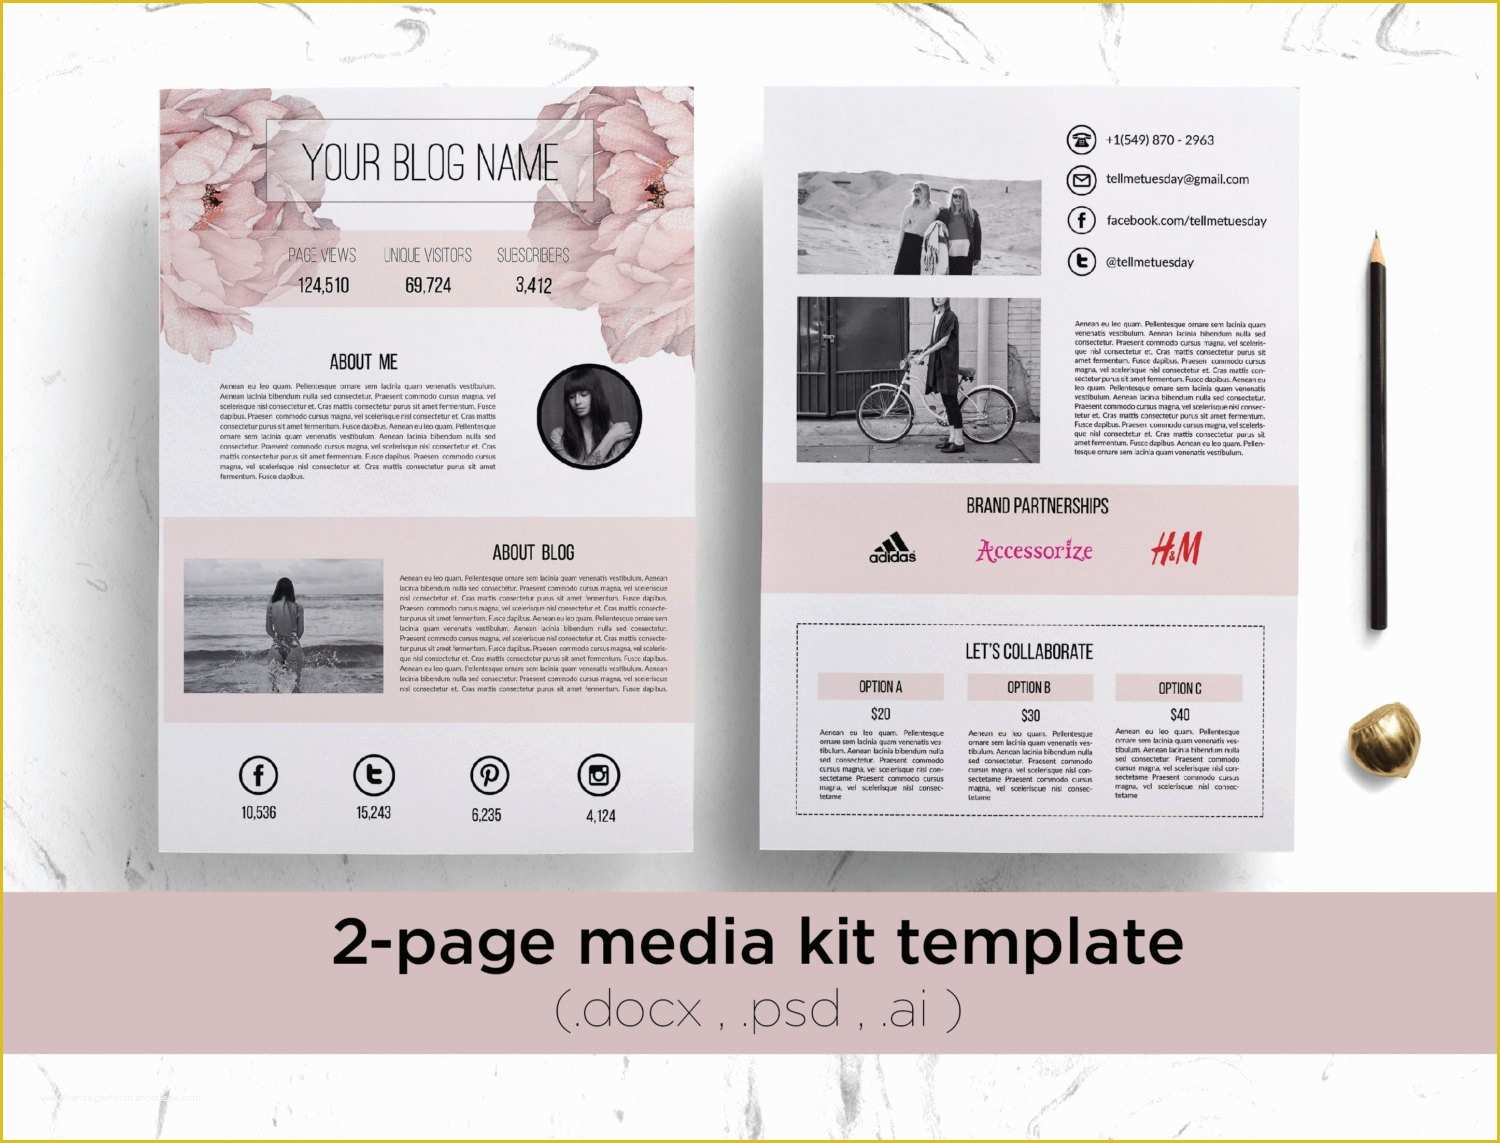 Free Press Kit Template Of 2 Page Media Kit Template Floral Background Elegant Blog